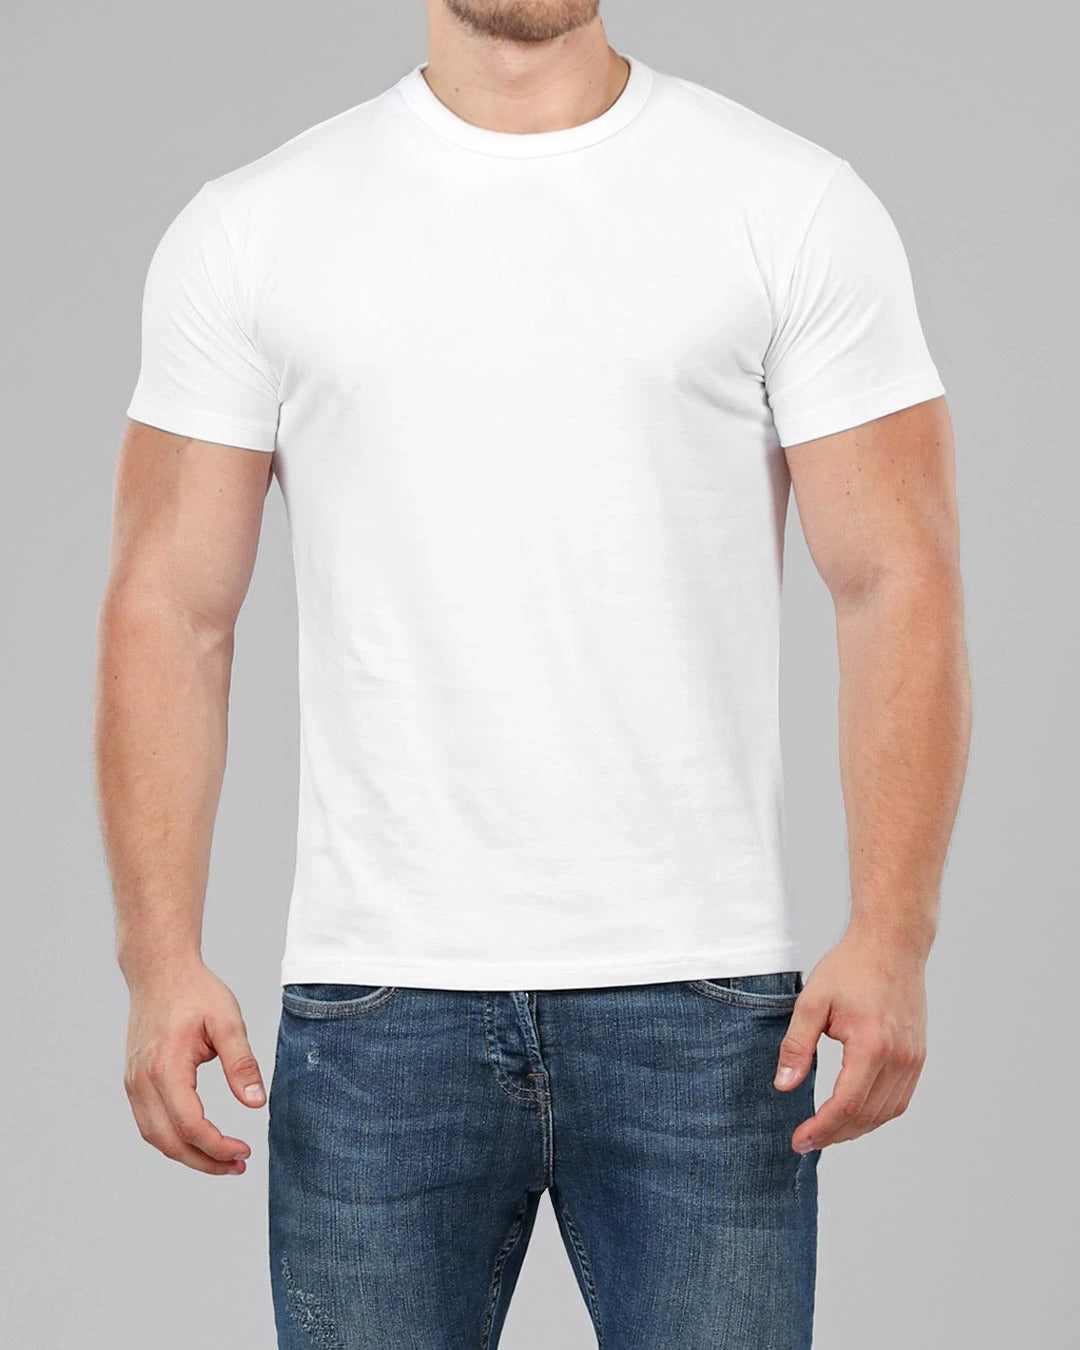 Men's Crew Neck Fitted Plain T-Shirt | Fit Basics